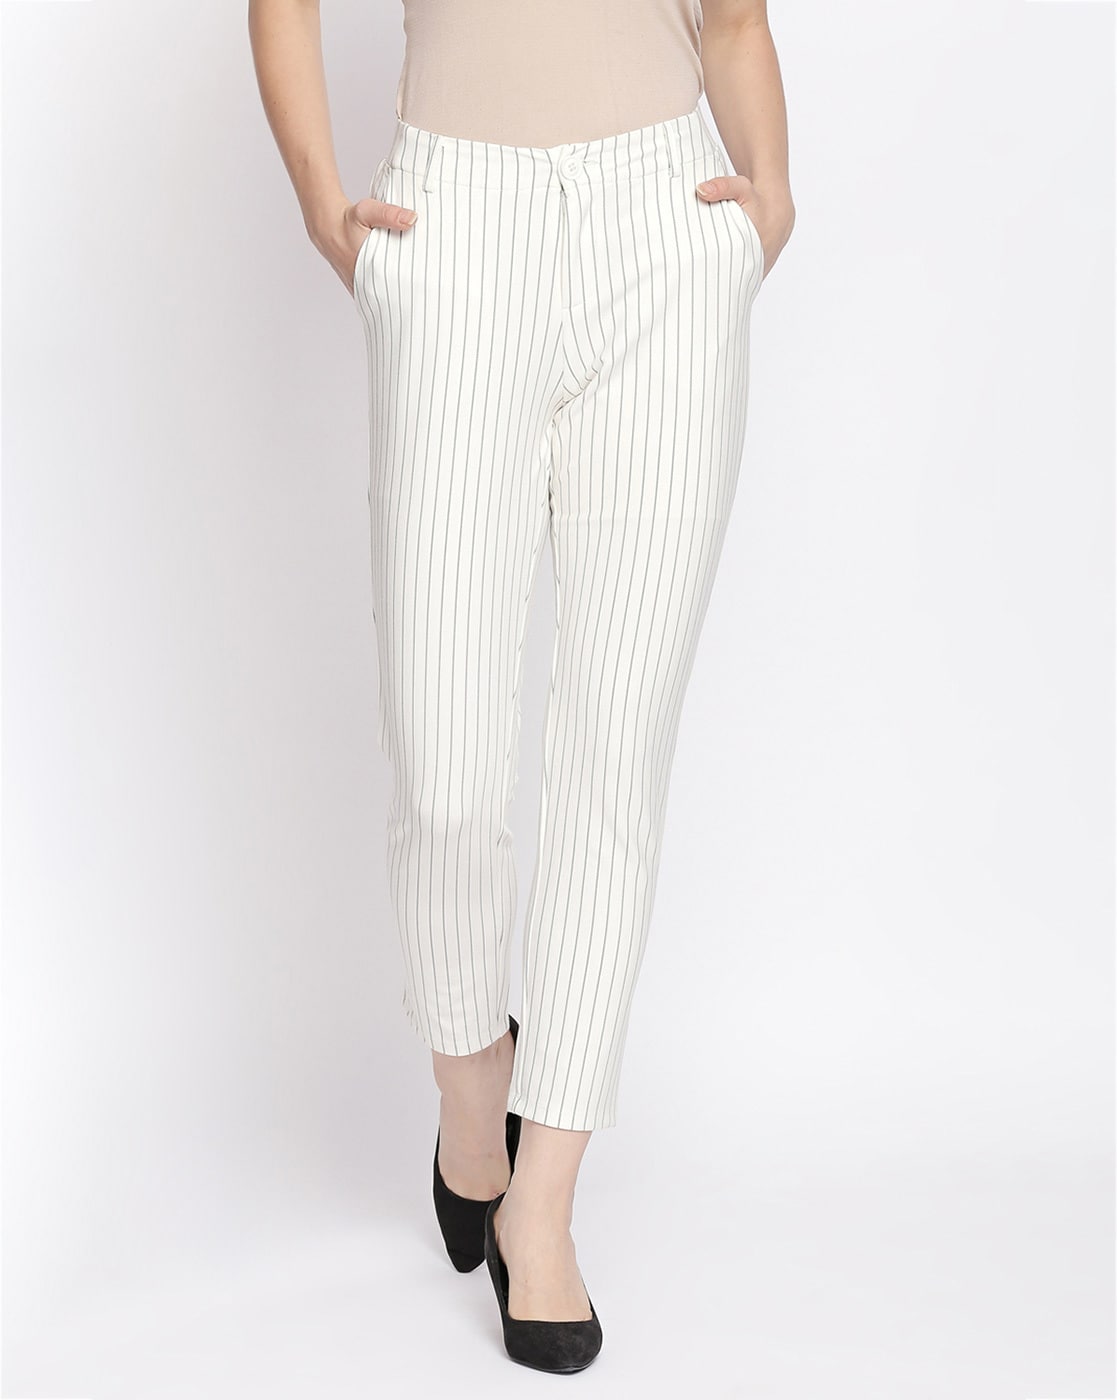 Women's Designer Pants & Shorts on Sale | Neiman Marcus